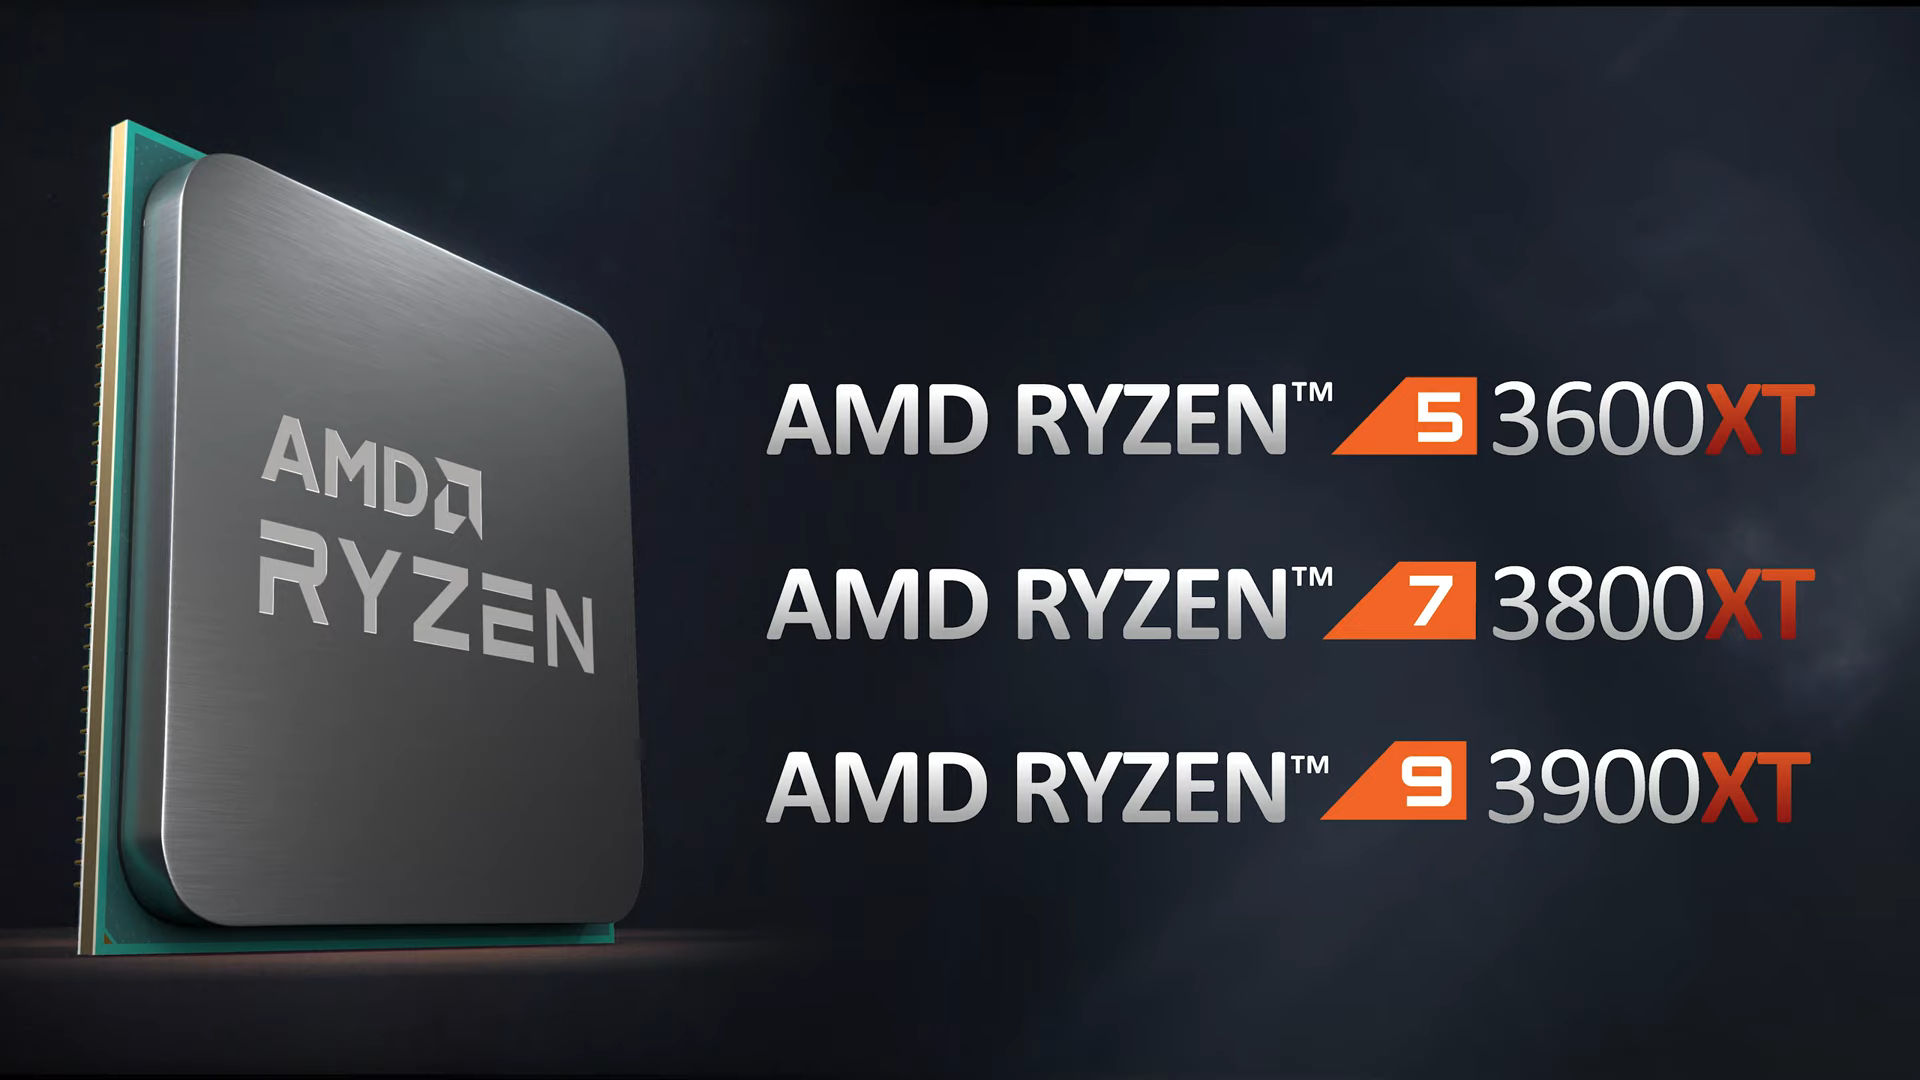 AMD Announces Ryzen 9 3900XT, Ryzen 7 3800XT and Ryzen 5 3600XT Processors Alongside A520 Chipset